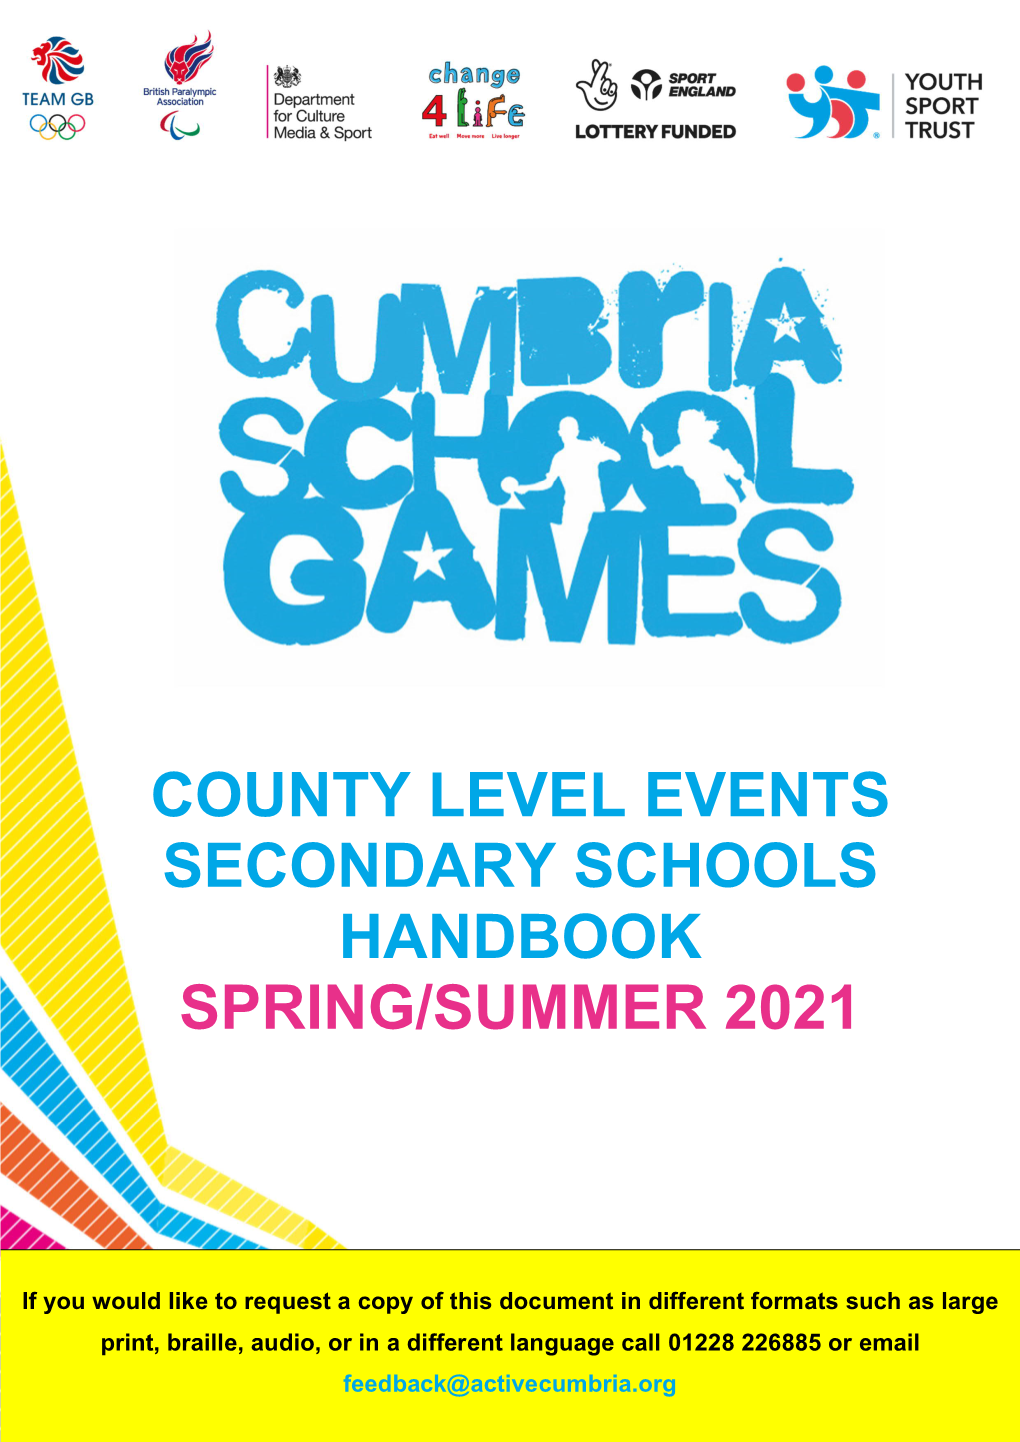 County Level Events Secondary Schools Handbook Spring/Summer 2021